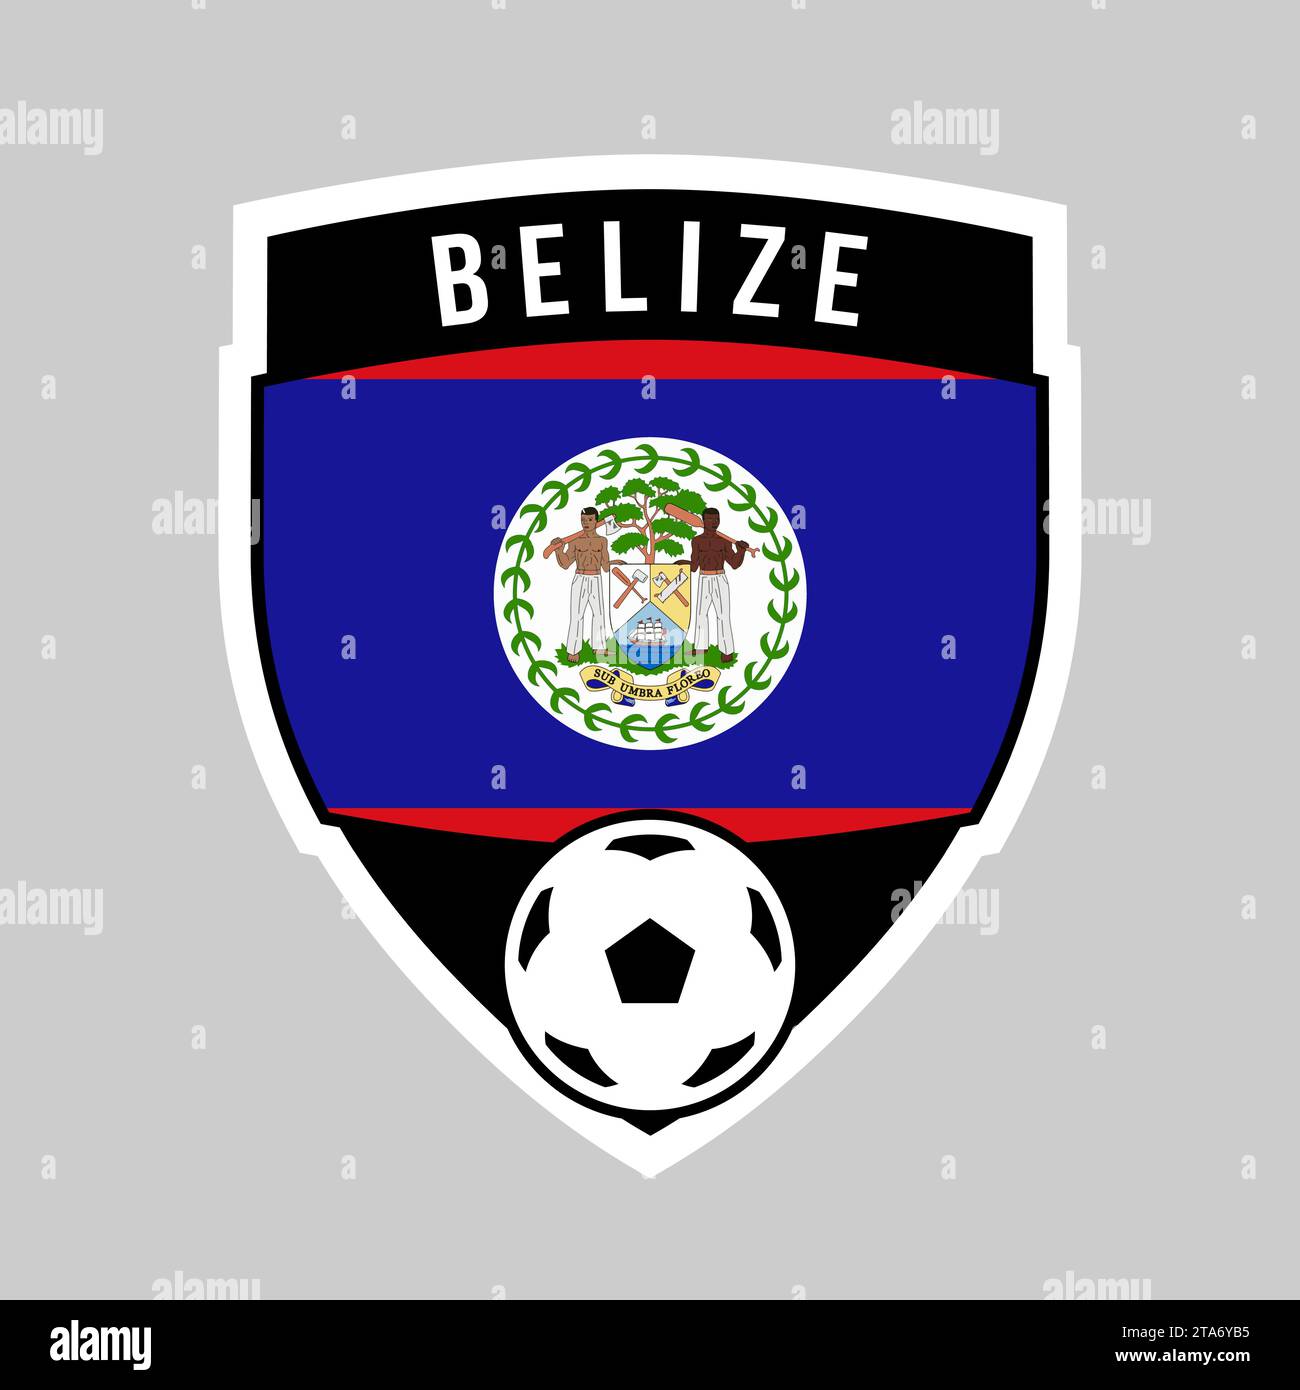 Illustration of Shield Team Badge of Belize for Football Tournament Stock Vector